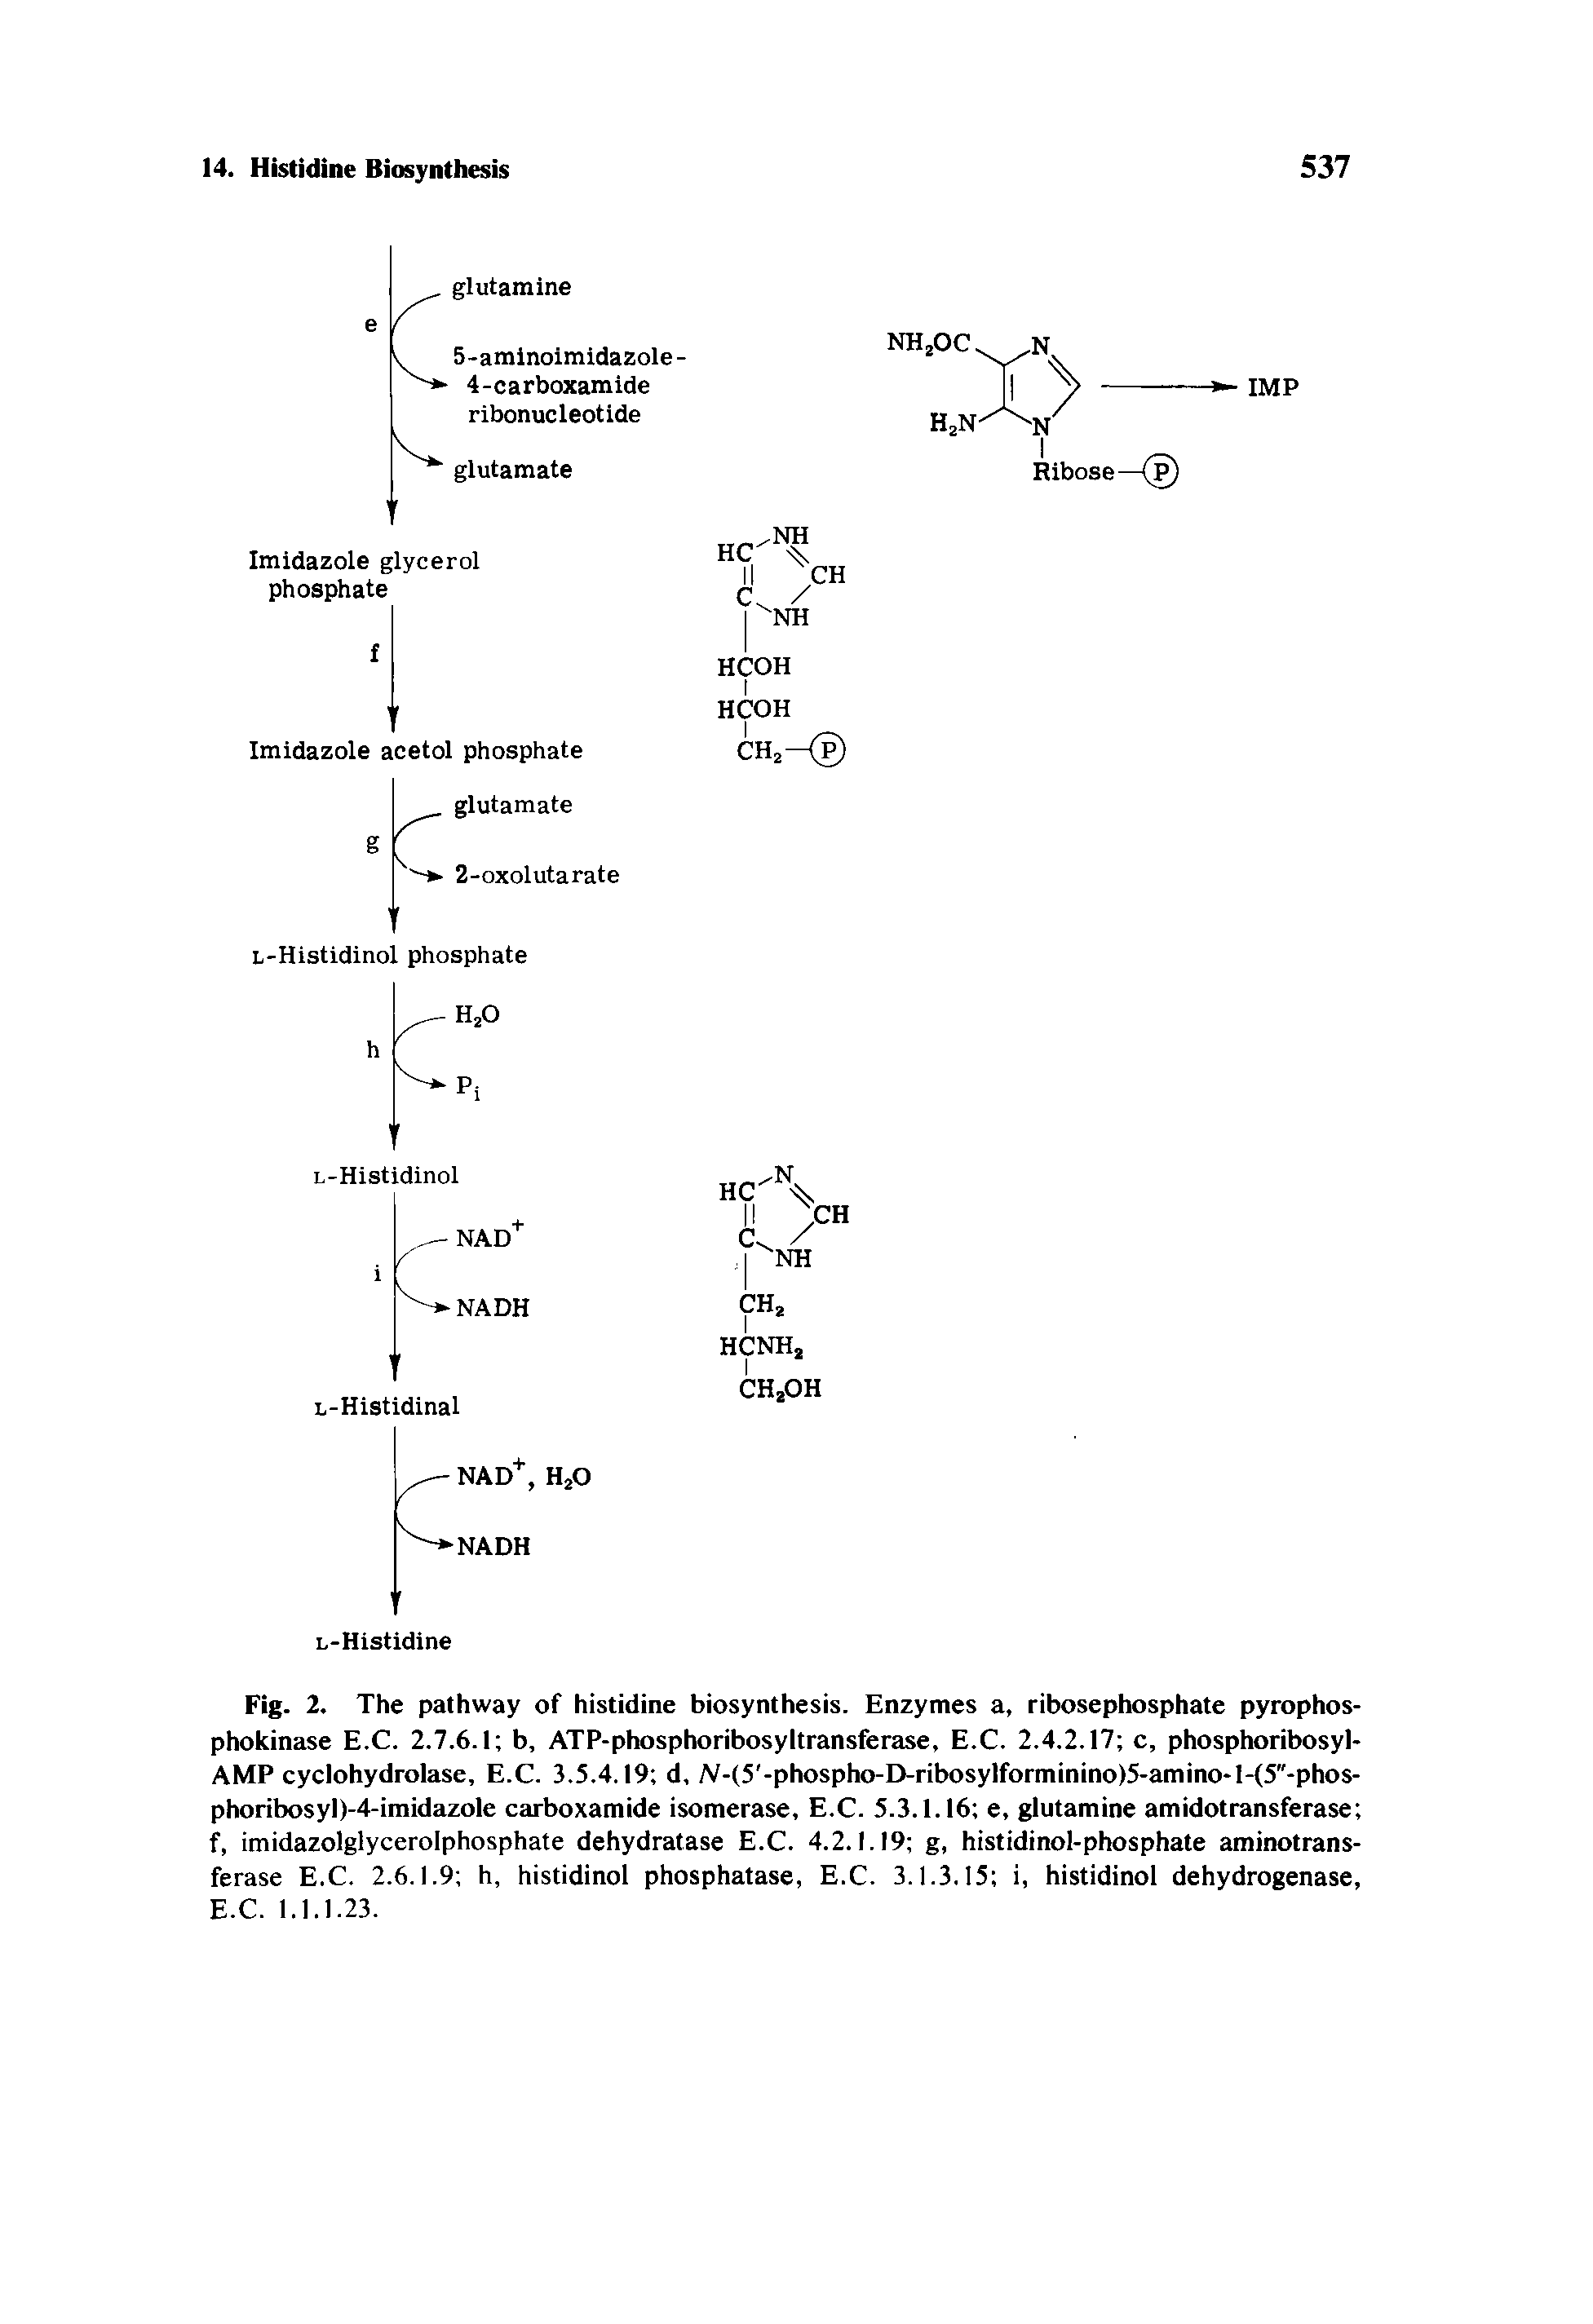 Fig. 2. The pathway of histidine biosynthesis. Enzymes a, ribosephosphate pyrophos-phokinase E.C. 2.7.6.1 b, ATP-phosphoribosyltransferase, E.C. 2.4.2.17 c, phosphoribosyl-AMP cyclohydrolase, E.C. 3.5.4.19 d, N-(5 -phospho-D-ribosylforminino)5-amino-l-(5"-phos-phoribo yl)-4-imidazole carboxamide isomerase, E.C. 5.3.1.16 e, glutamine amidotransferase f, imidazolglycerolphosphate dehydratase E.C. 4.2.1.19 g, histidinol-phosphate aminotransferase E.C. 2.6.1.9 h, histidinol phosphatase, E.C. 3.1.3.15 i, histidinol dehydrogenase, E.C. 1.1.1.23.